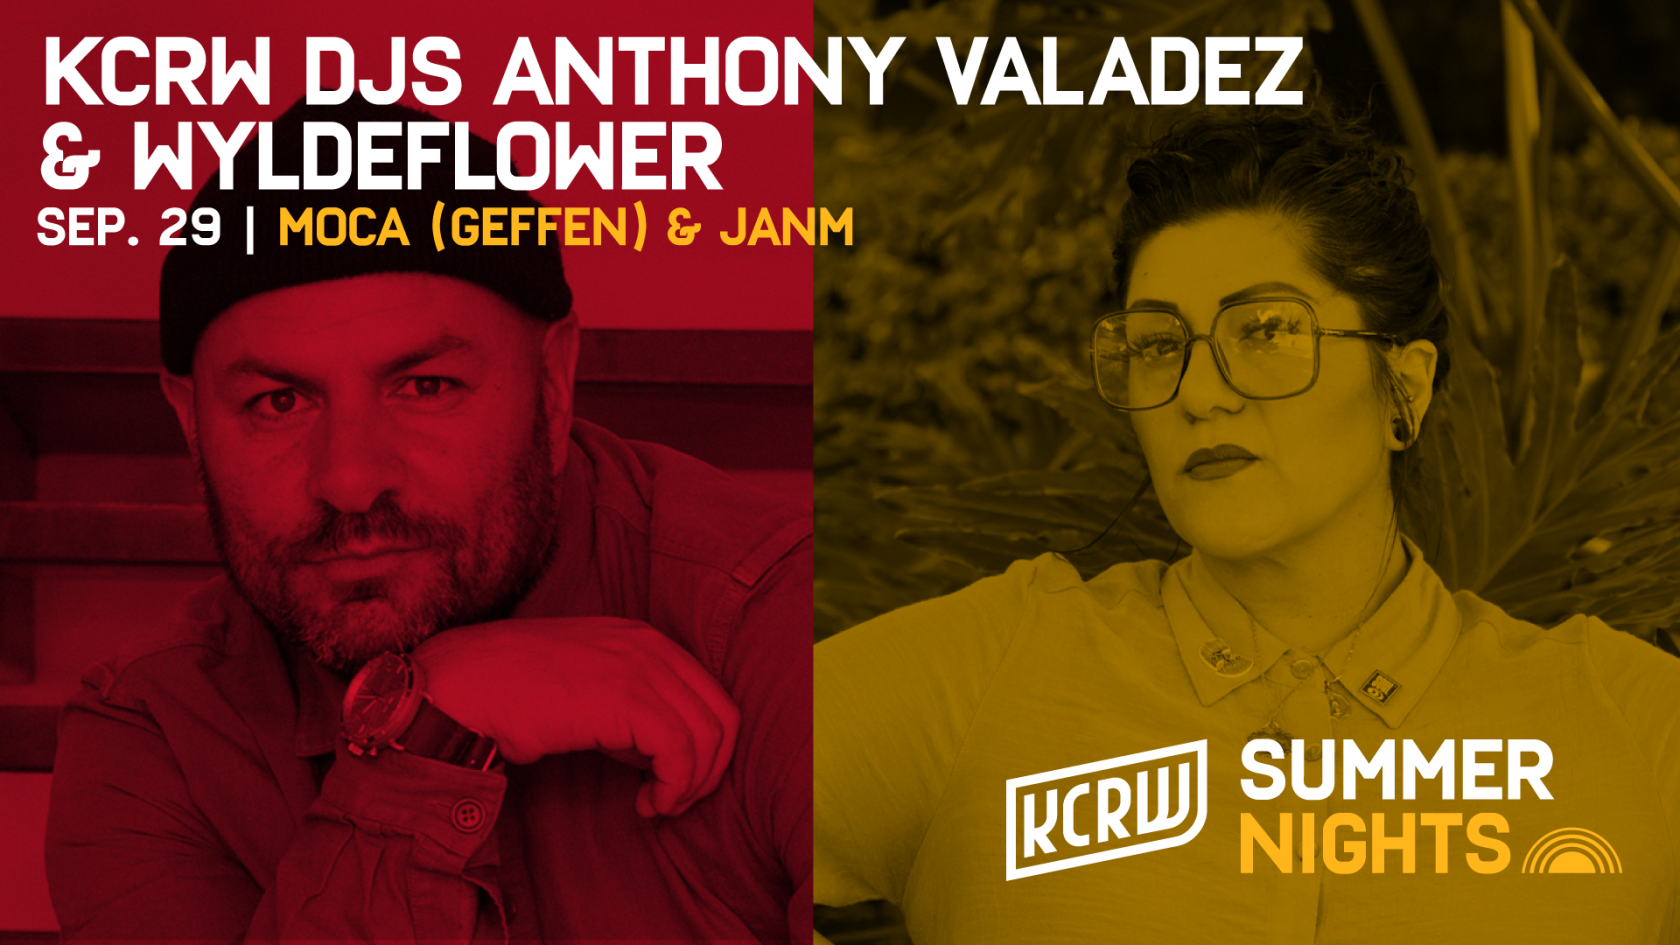 KCRW Summer Nights at MOCA Geffen & JANM with DJs Anthony Valadez + Wyldeflower